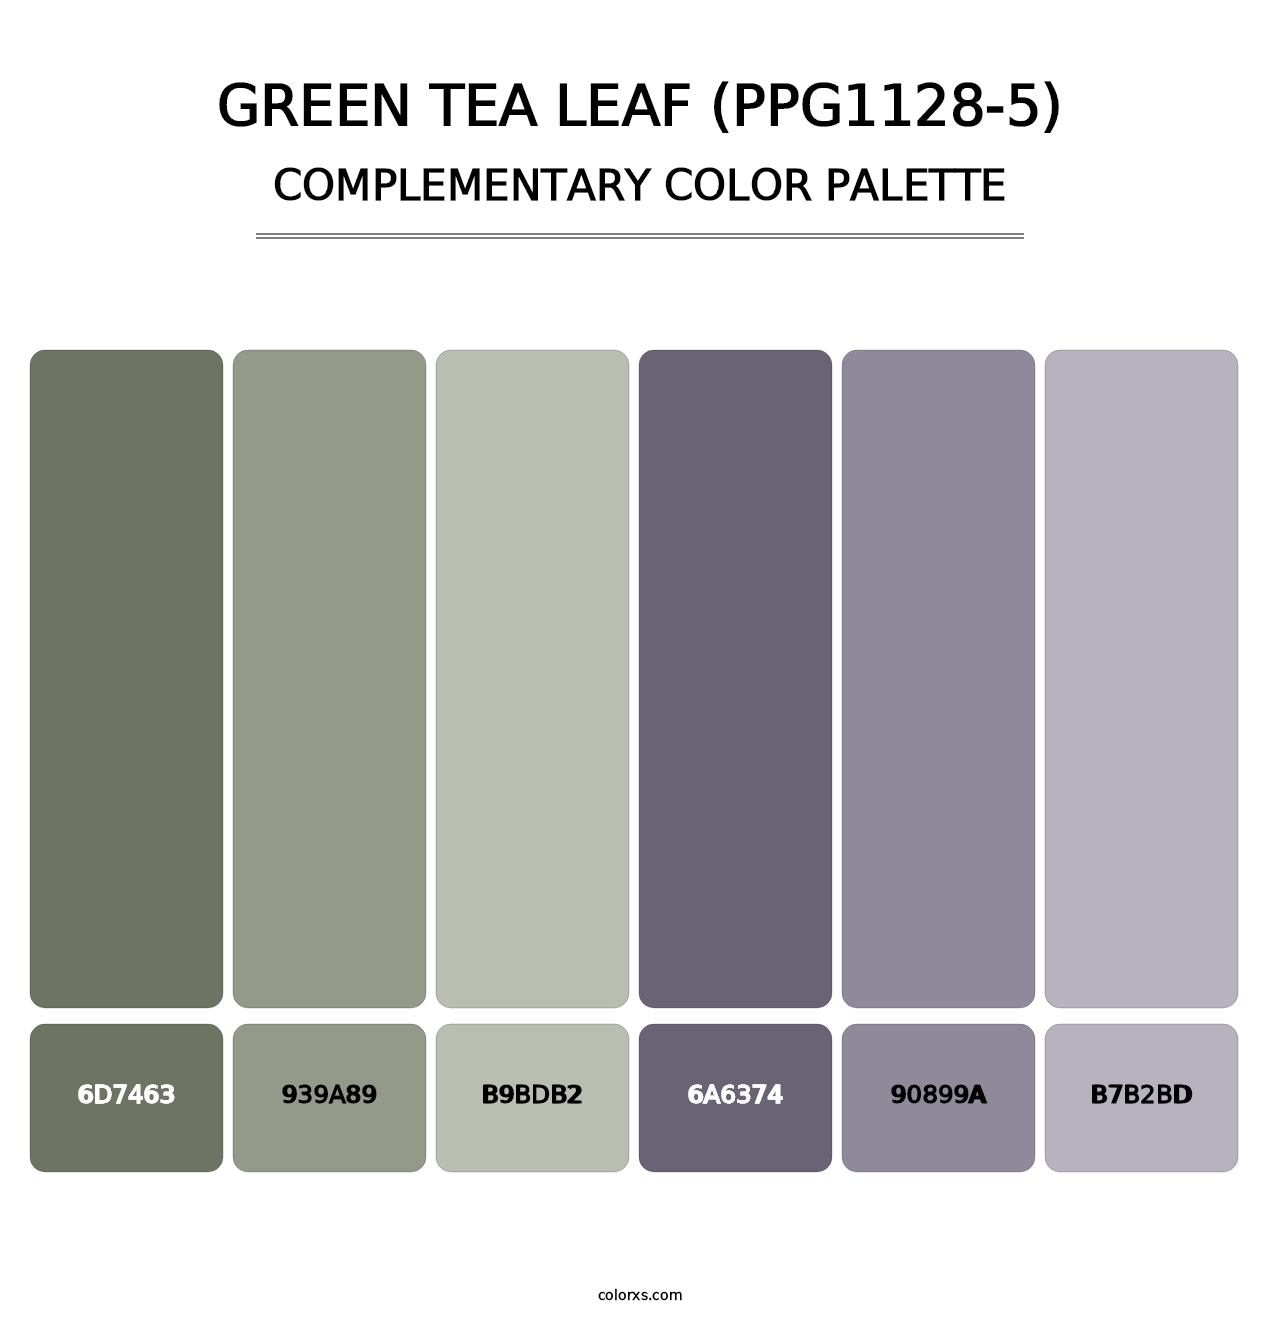 Green Tea Leaf (PPG1128-5) - Complementary Color Palette